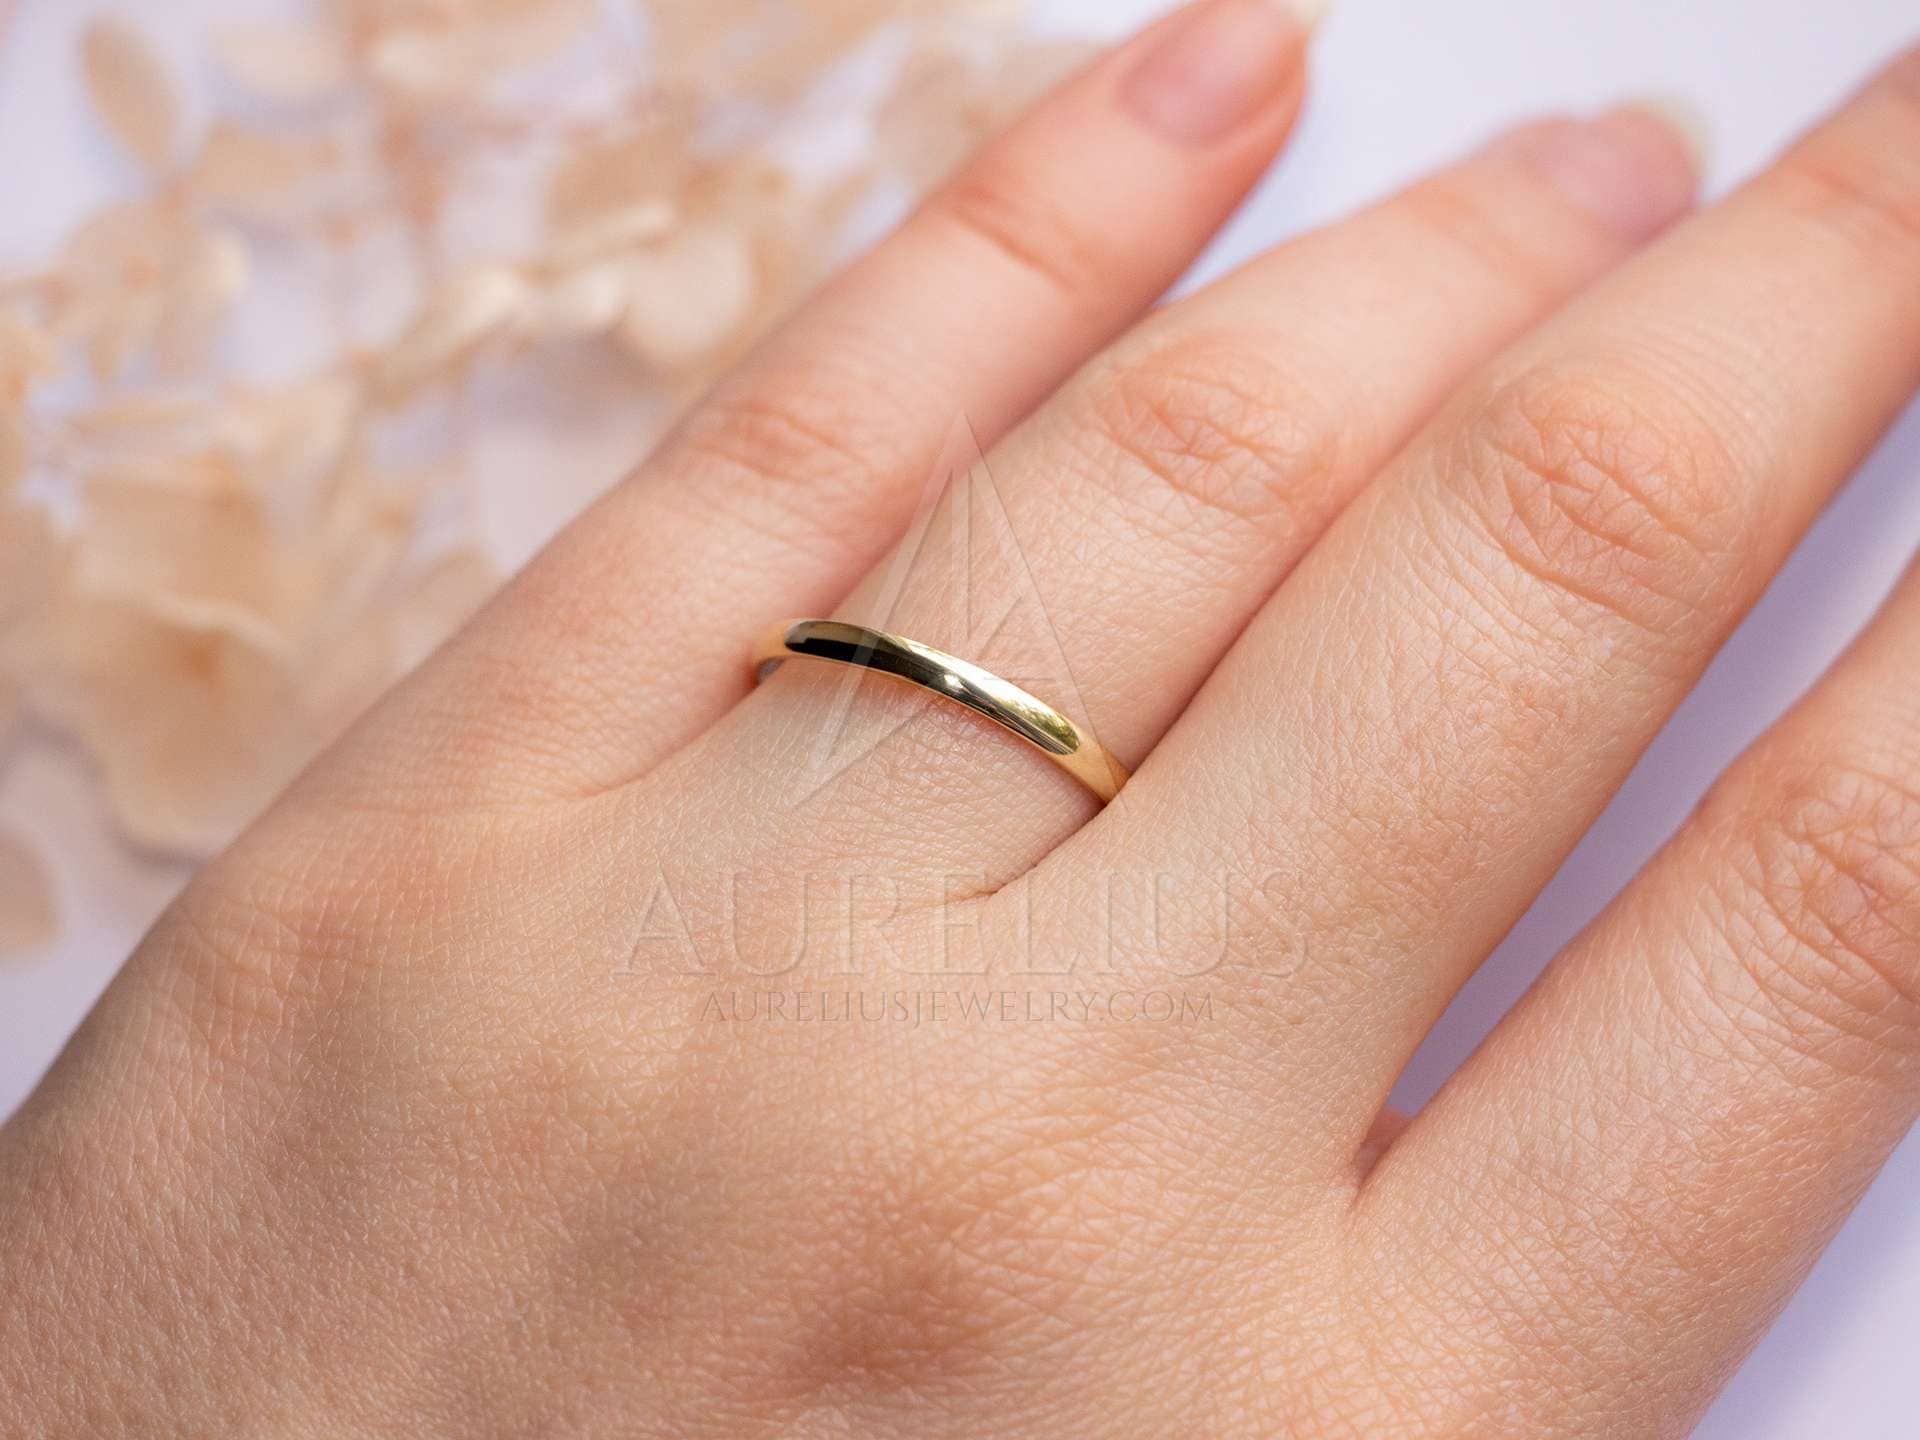 Buy Rings at Best Prices Online | PALMONAS